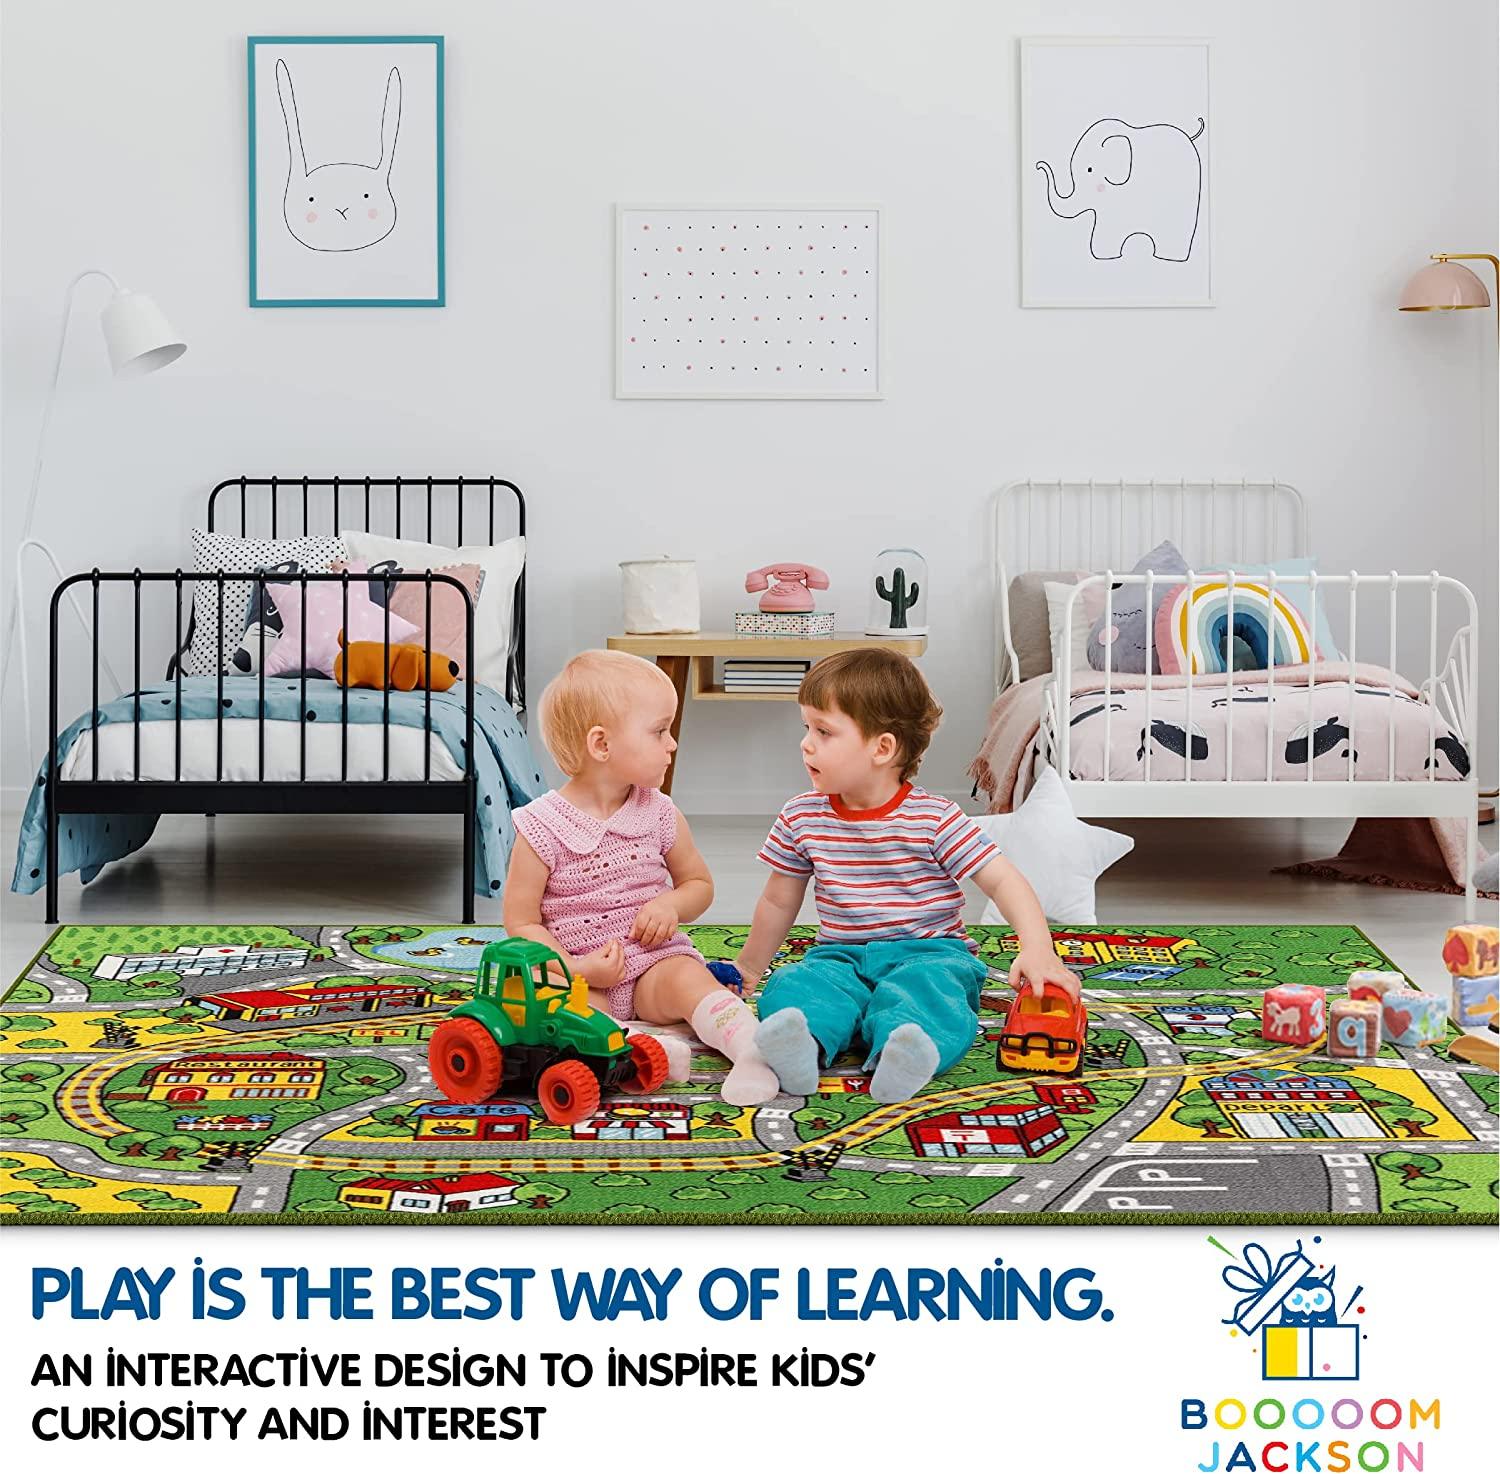 Booooom Jackson Kid Rug Carpet Playmat, Large Play Train Rug for Playroom, Bedroom, and Nursery Room, Kids Race Track Rug with Non-Slip Rubber Backing, 74”x51”, Multicolor